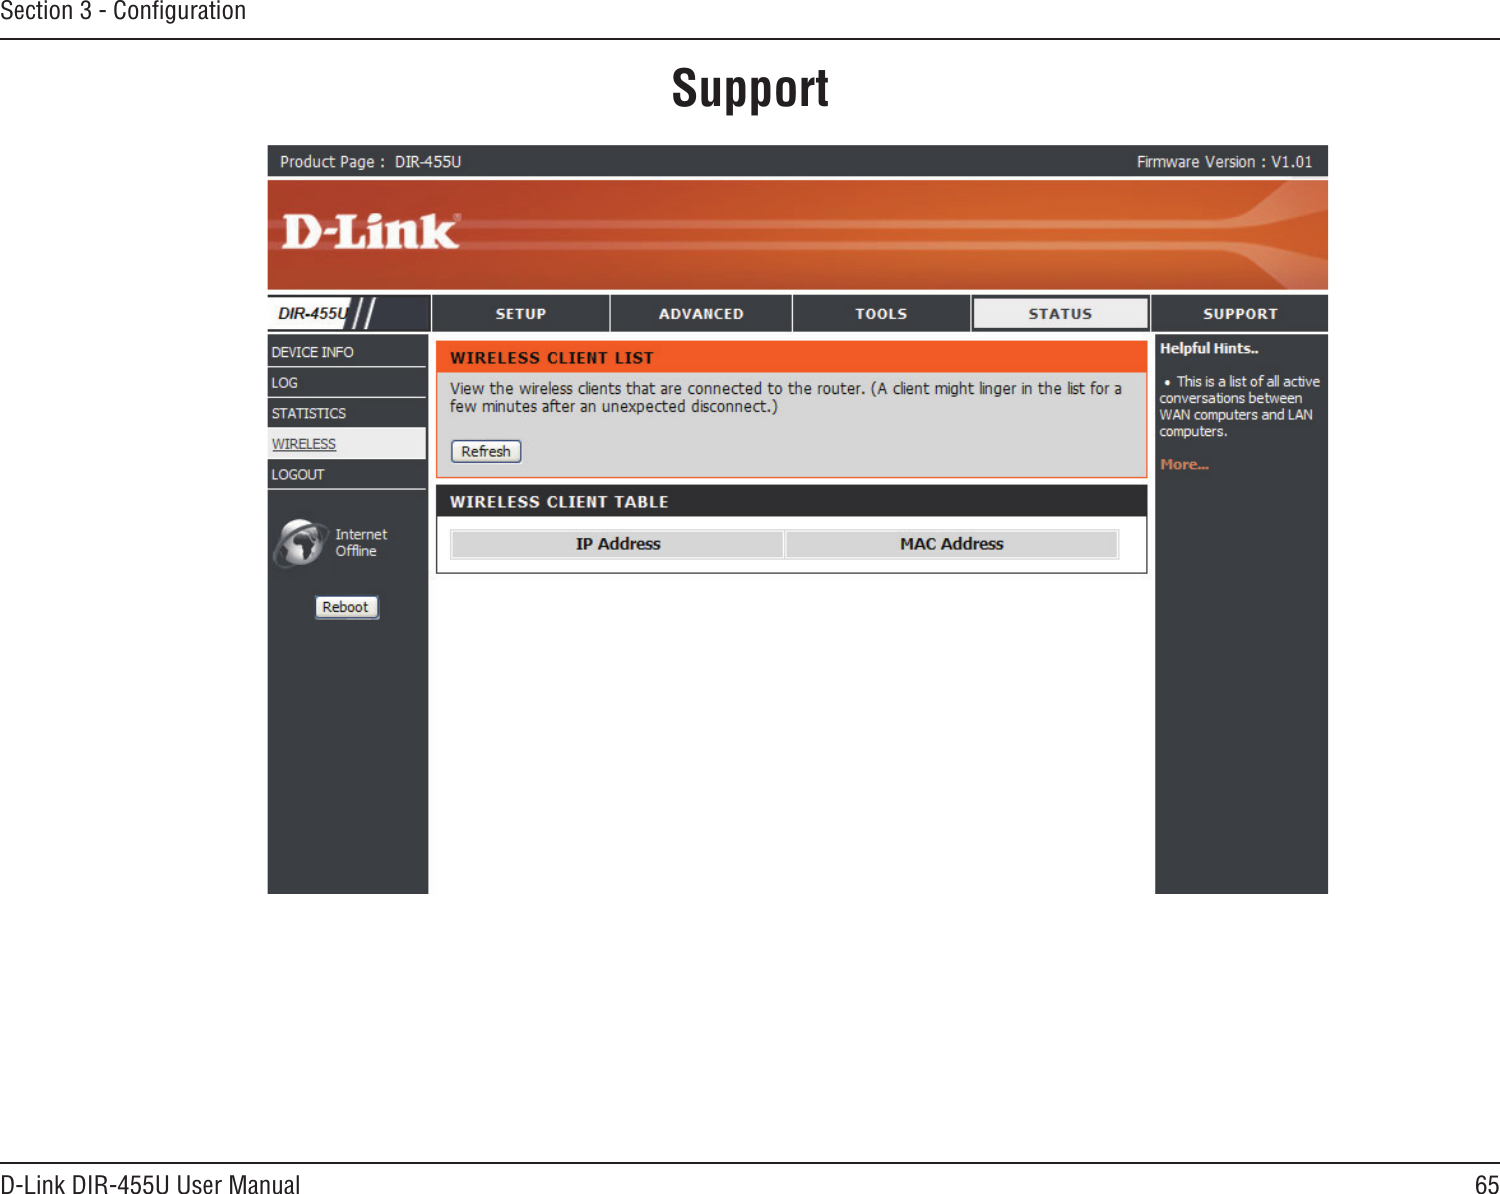 65D-Link DIR-455U User ManualSection 3 - ConﬁgurationSupport